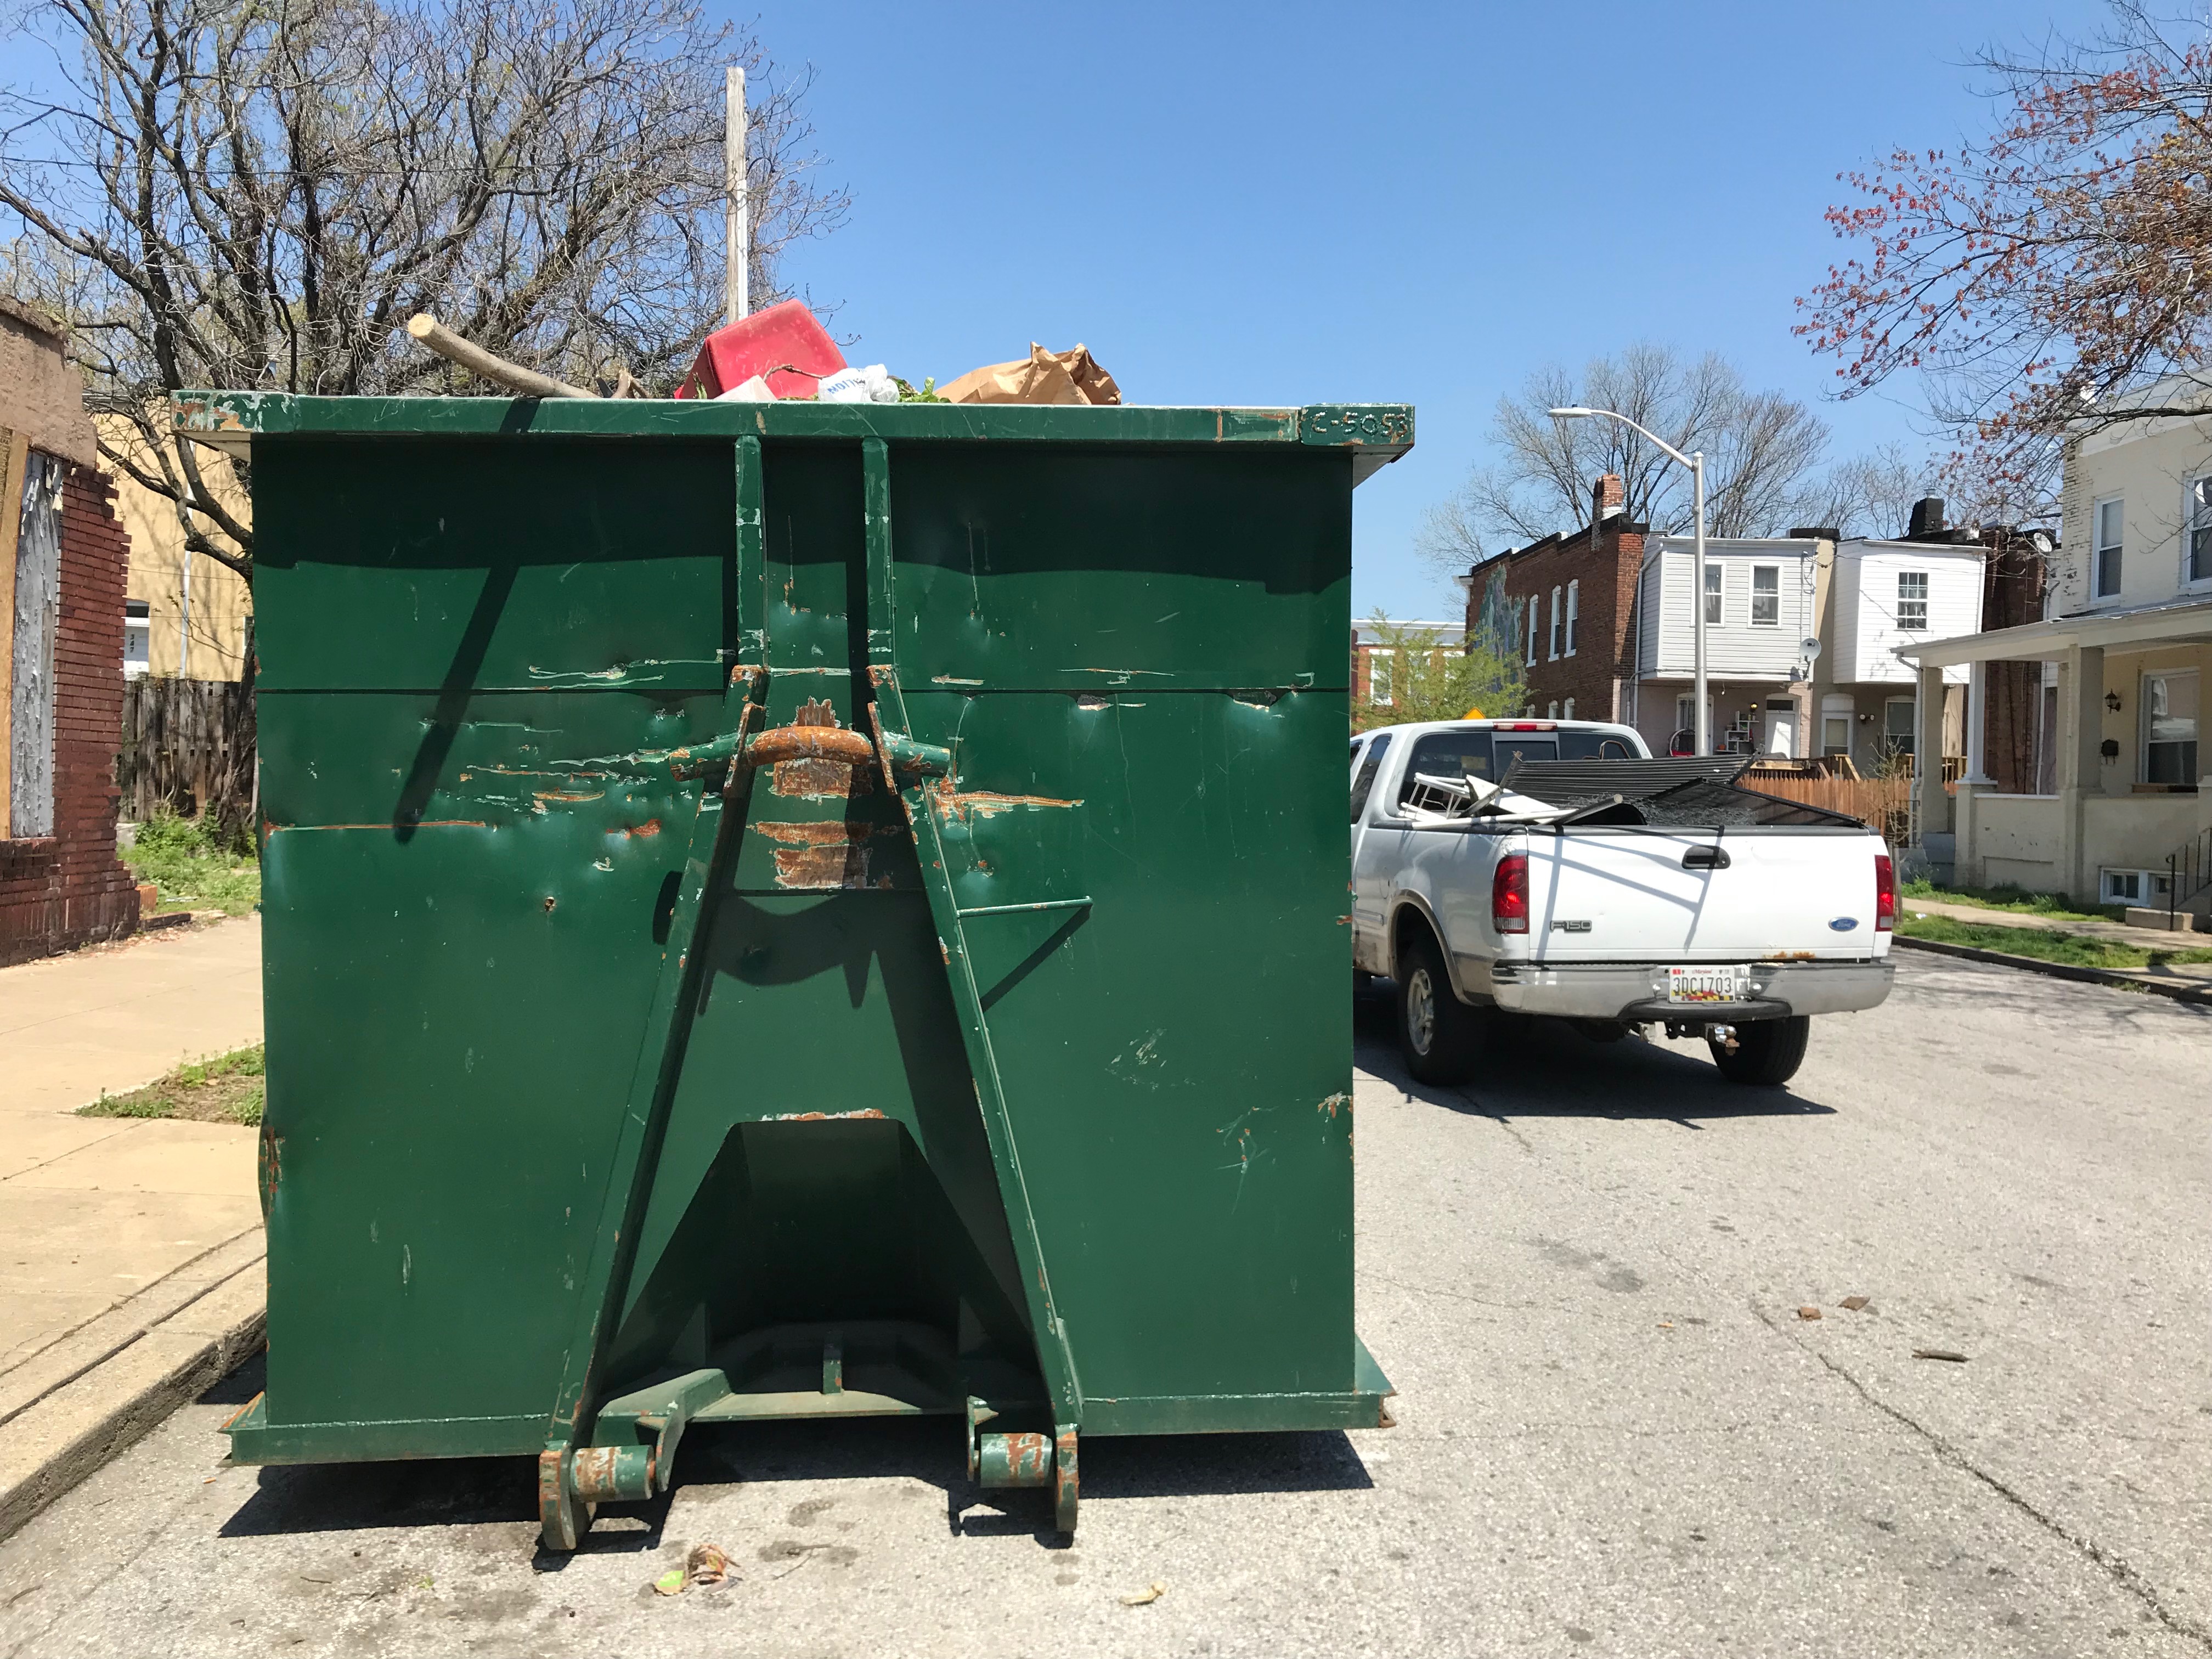 Dumpster, Barclay Street and E. 27th Street (northwest corner), Baltimore, MD 21218, 27th Street, Baltimore, Barclay Street, Car, HQ Photo